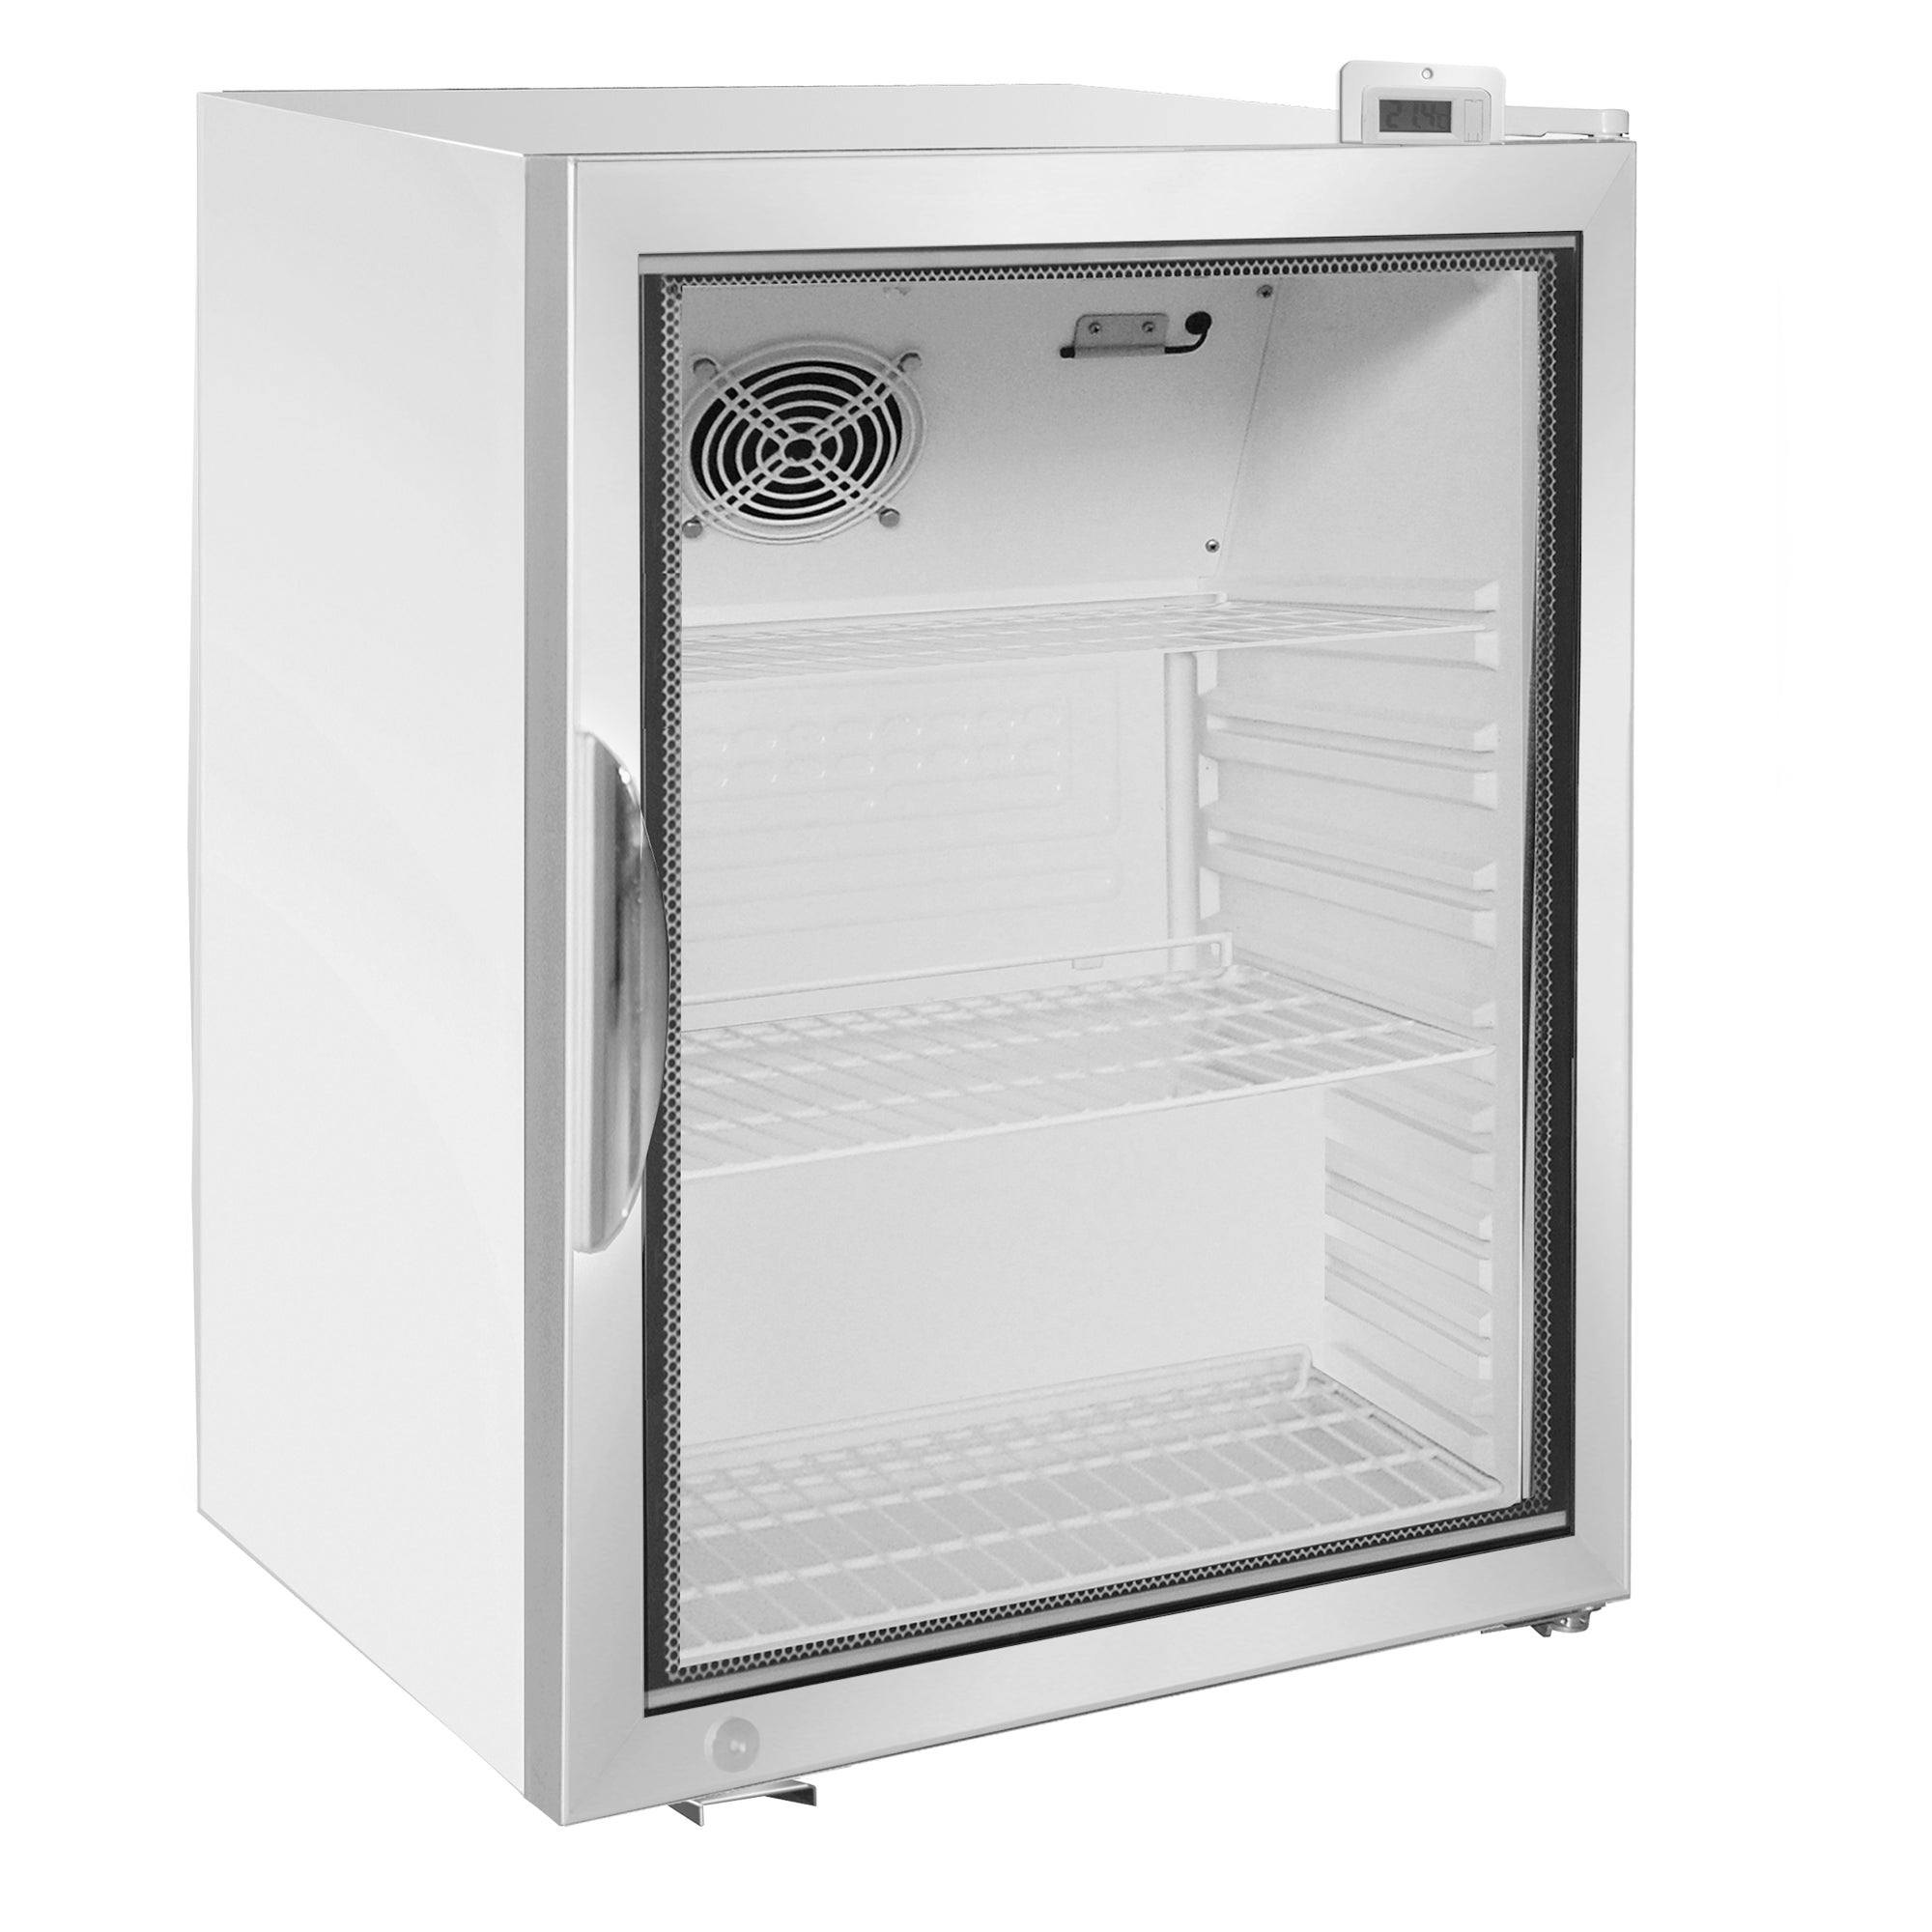 Maxx Cold - MXM1-3.5RHC, Maxx Cold Merchandiser Refrigerator, Countertop, 24.4"W, 3.5 cu. ft. Storage Capacity, in White